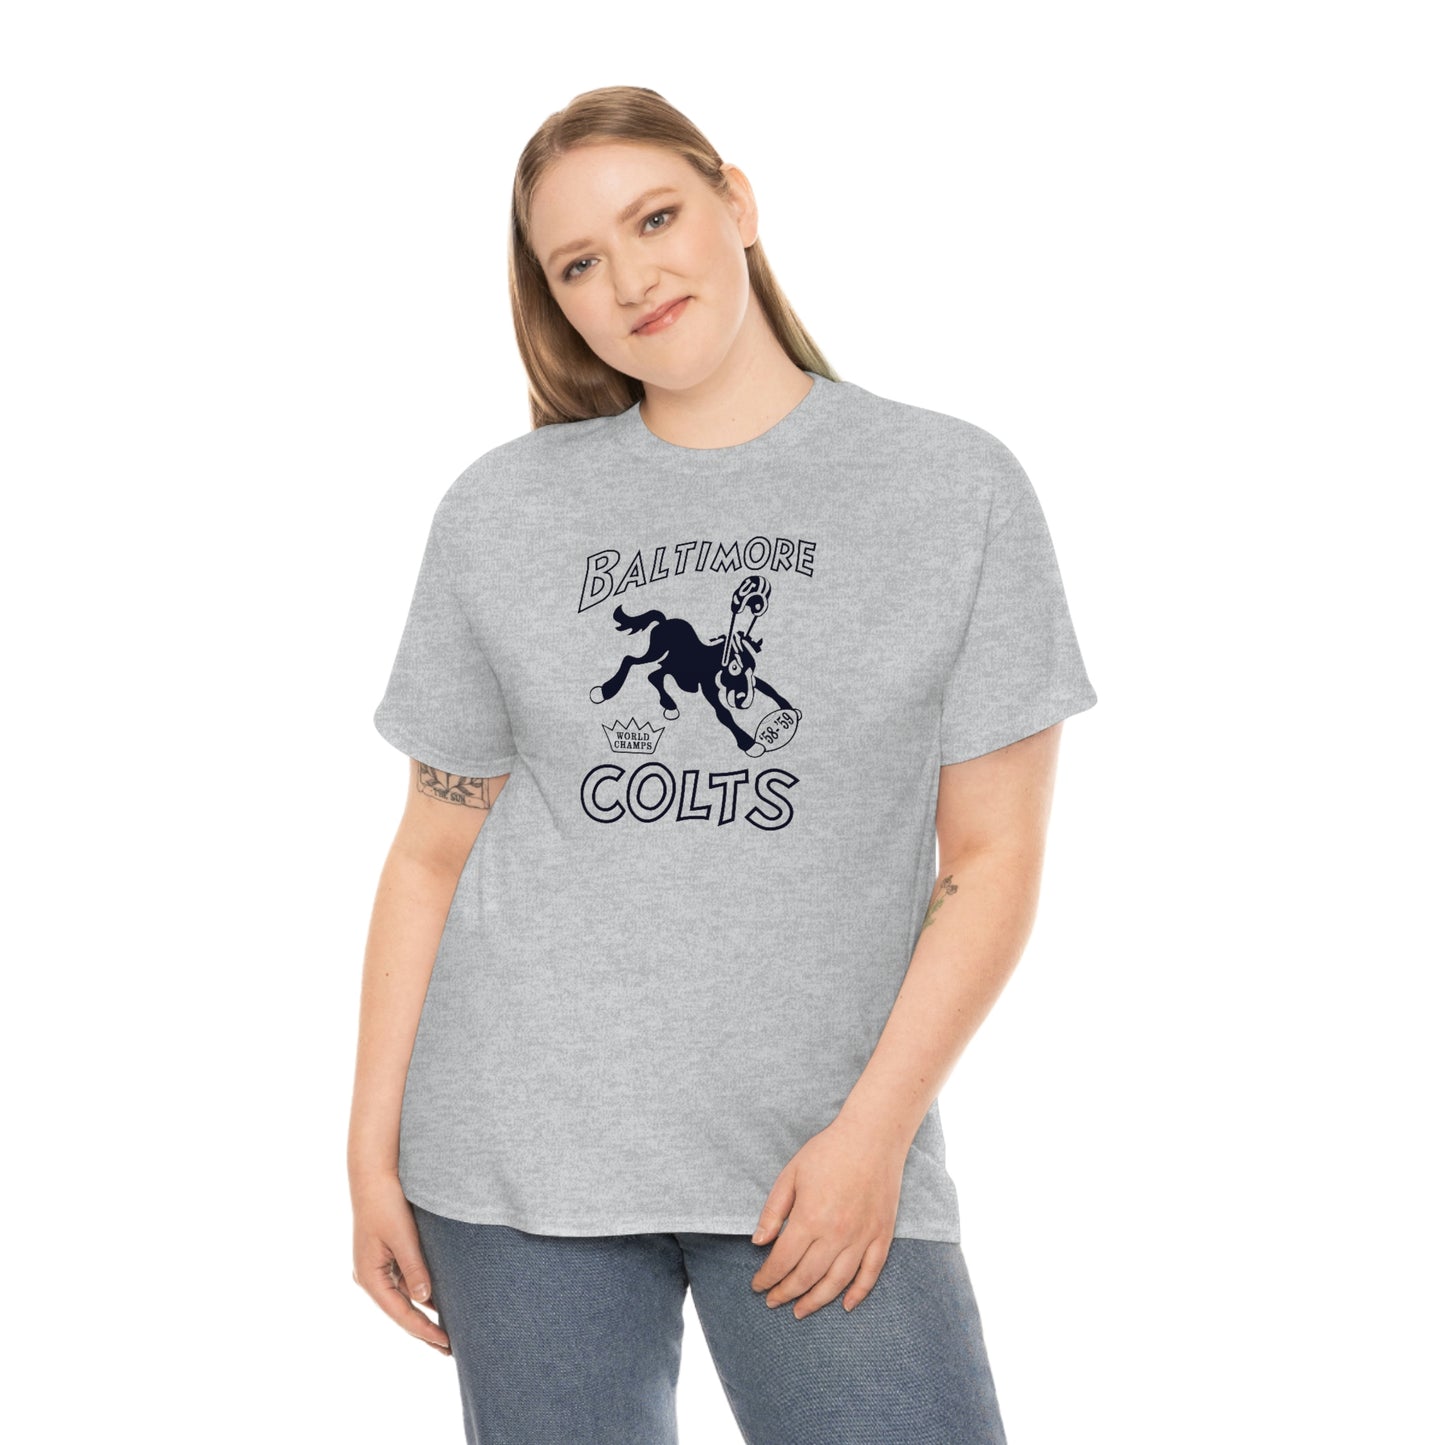 Baltimore Colts T-Shirt